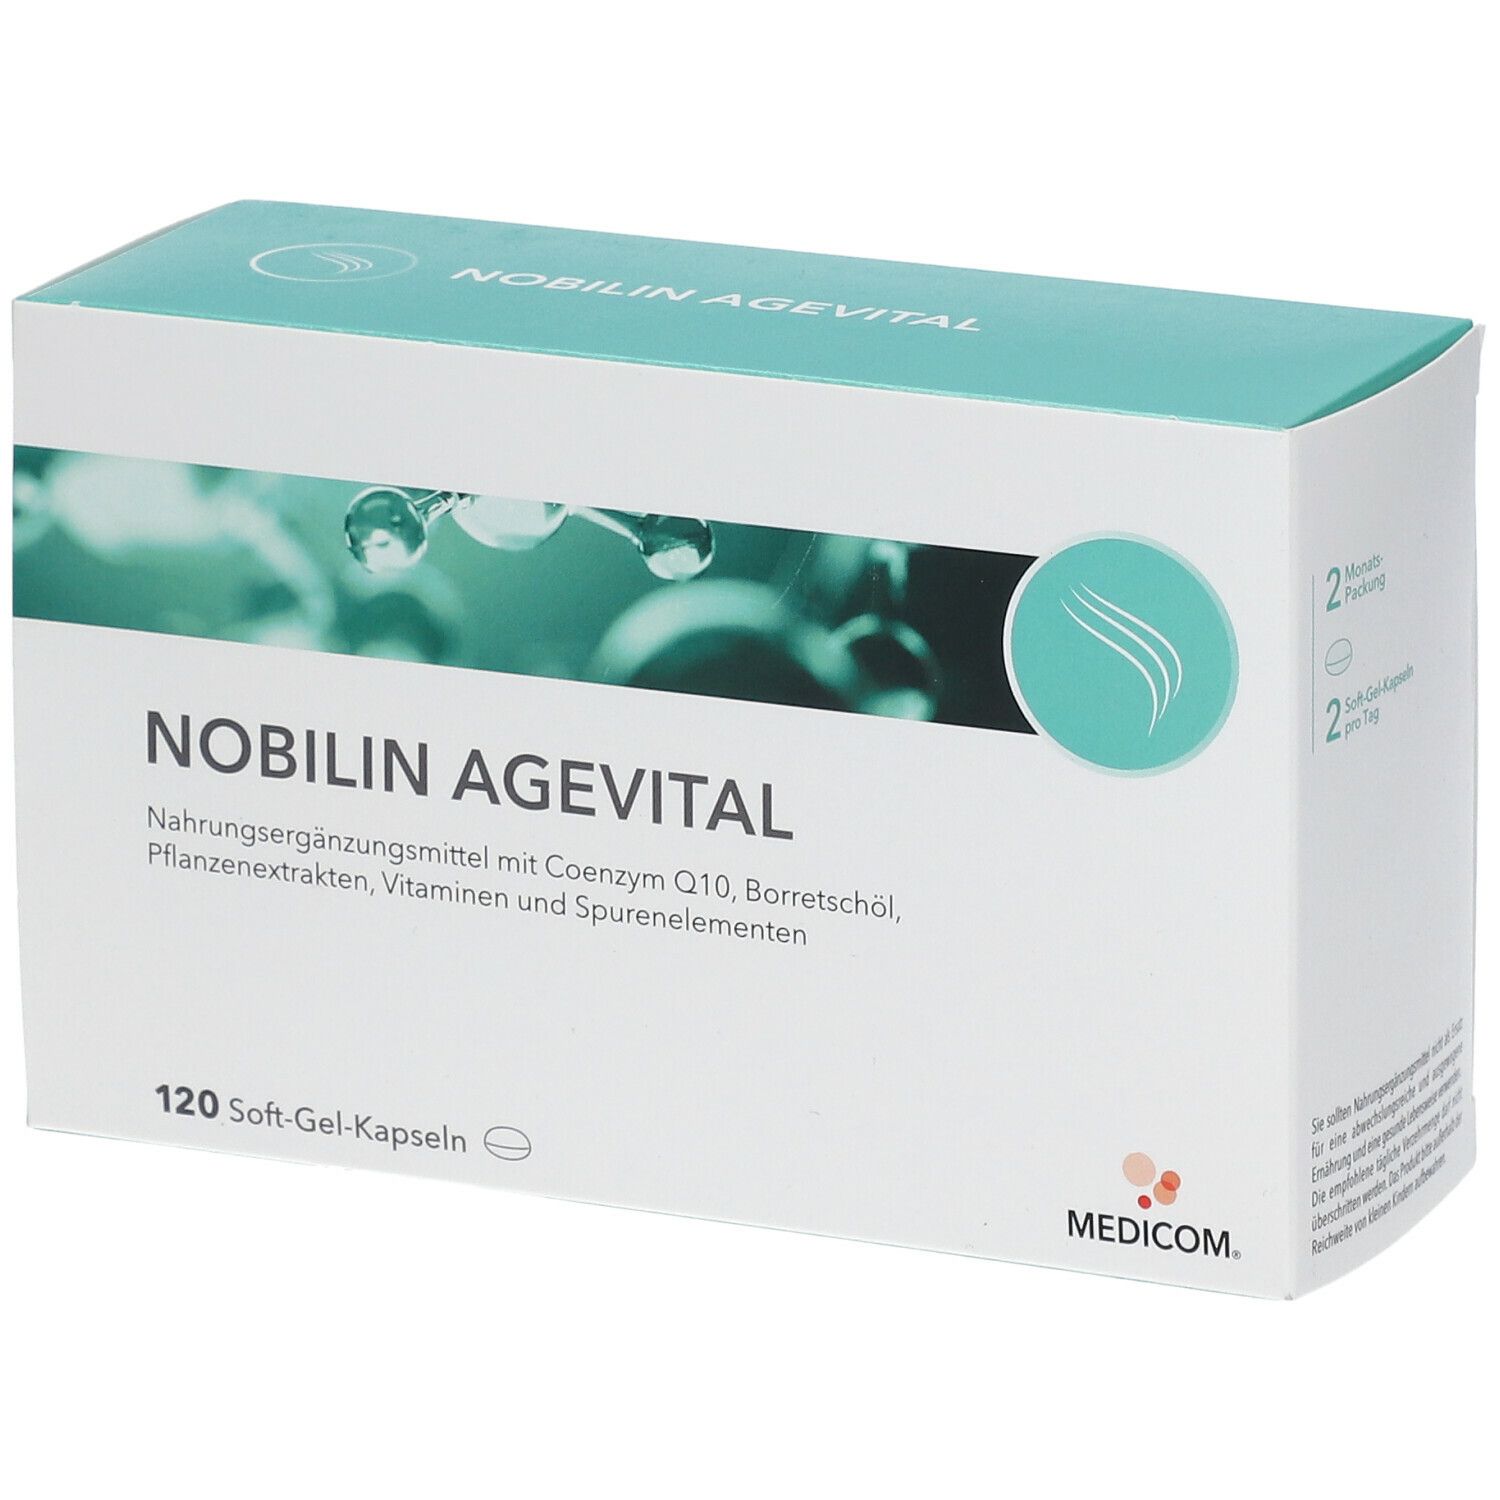 Nobilin Agevital